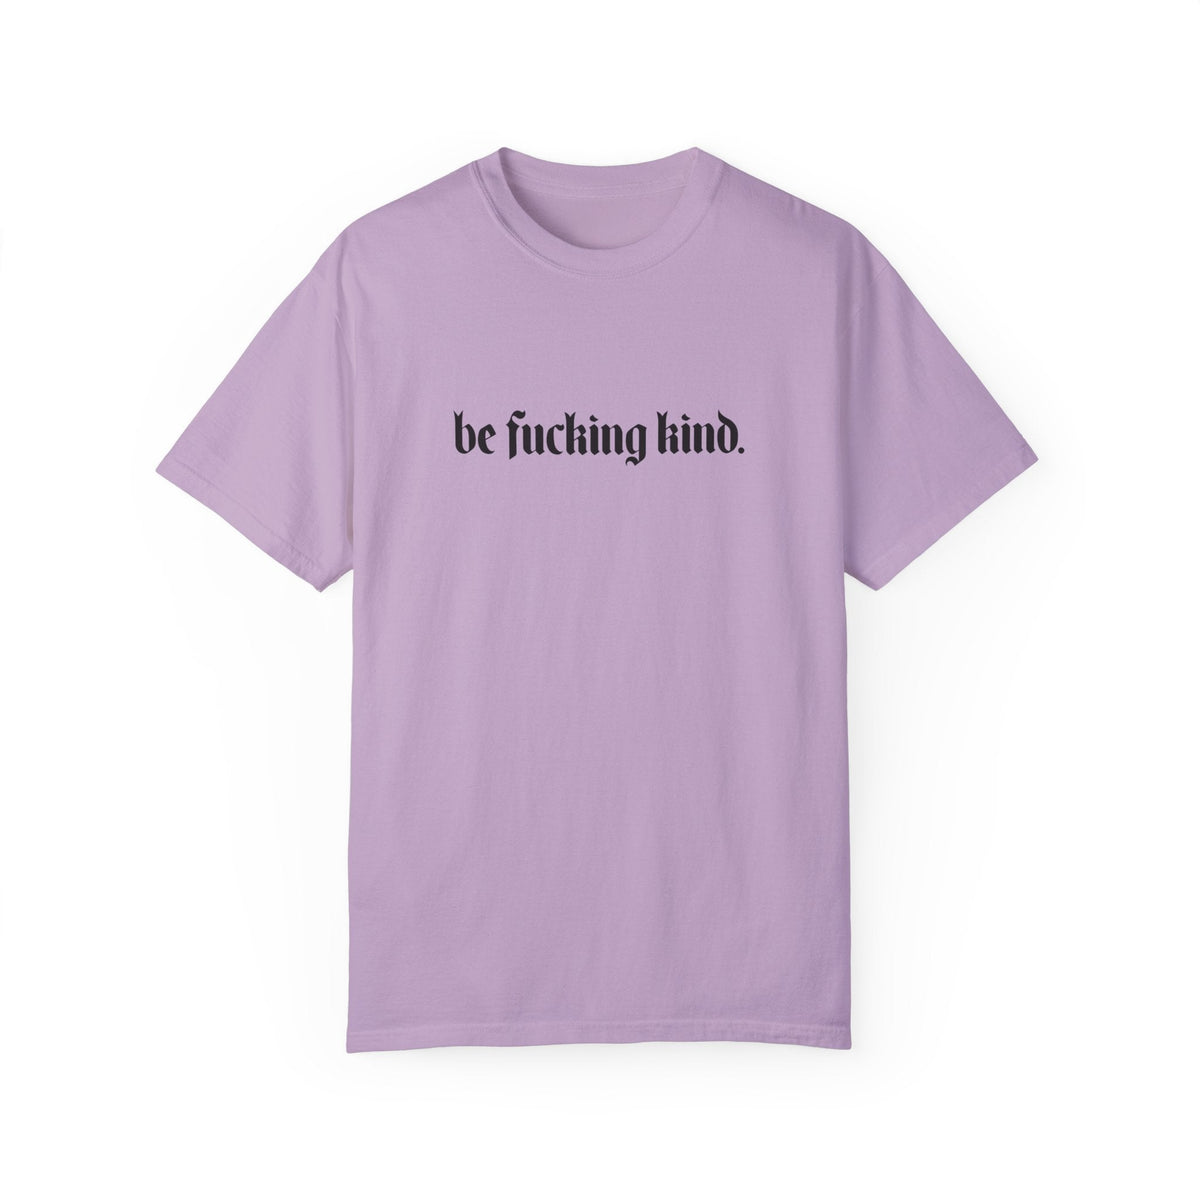 Be Fucking Kind Comfy Tee - Goth Cloth Co.T - Shirt28312673350517599438